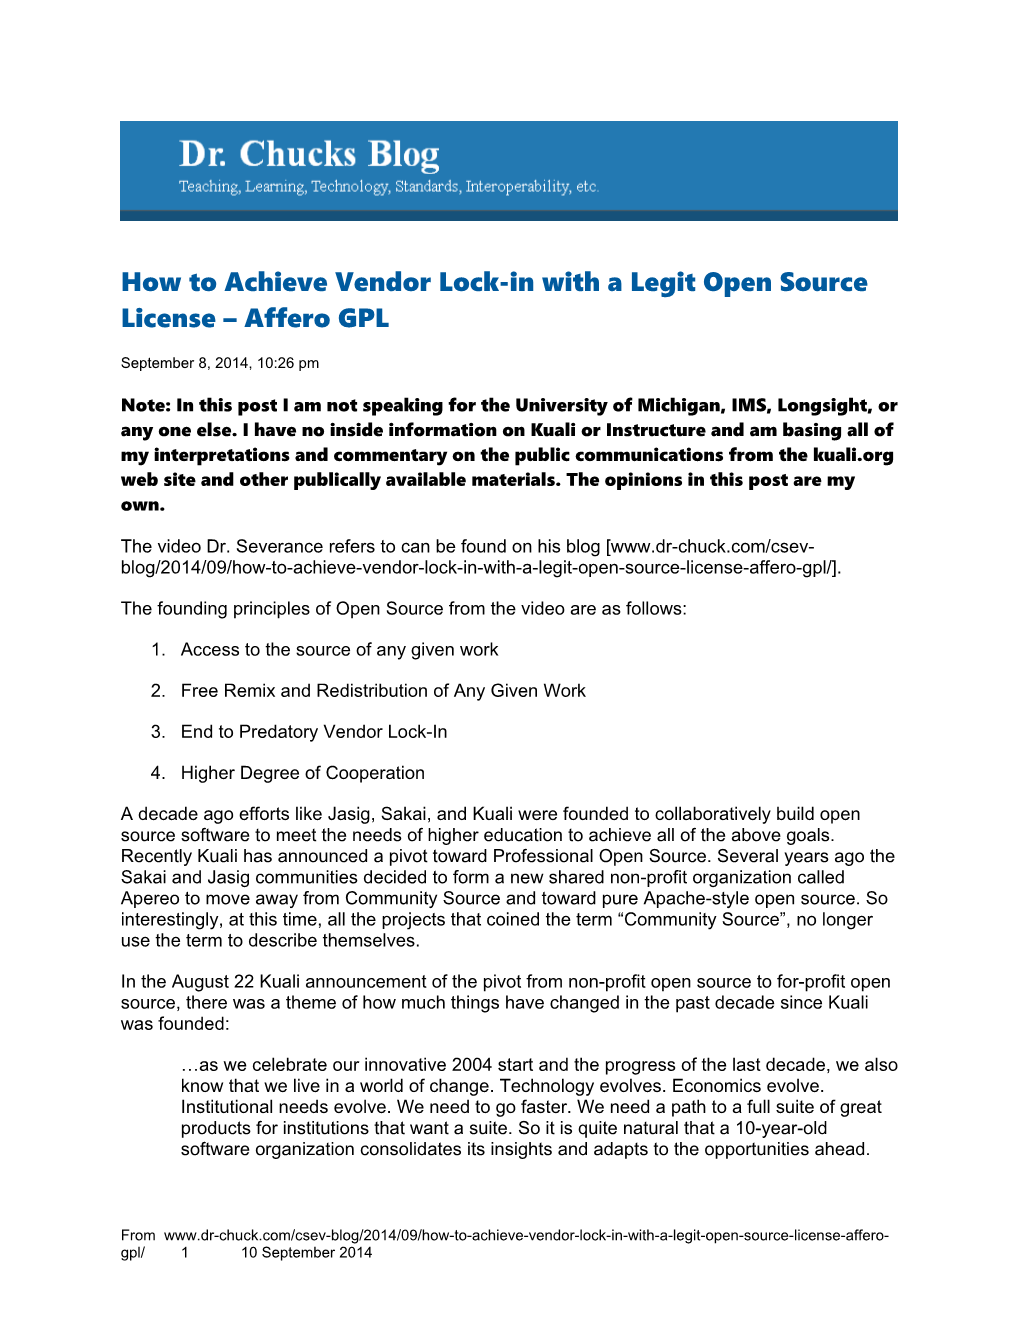 How to Achieve Vendor Lock-In with a Legit Open Source License Affero GPL